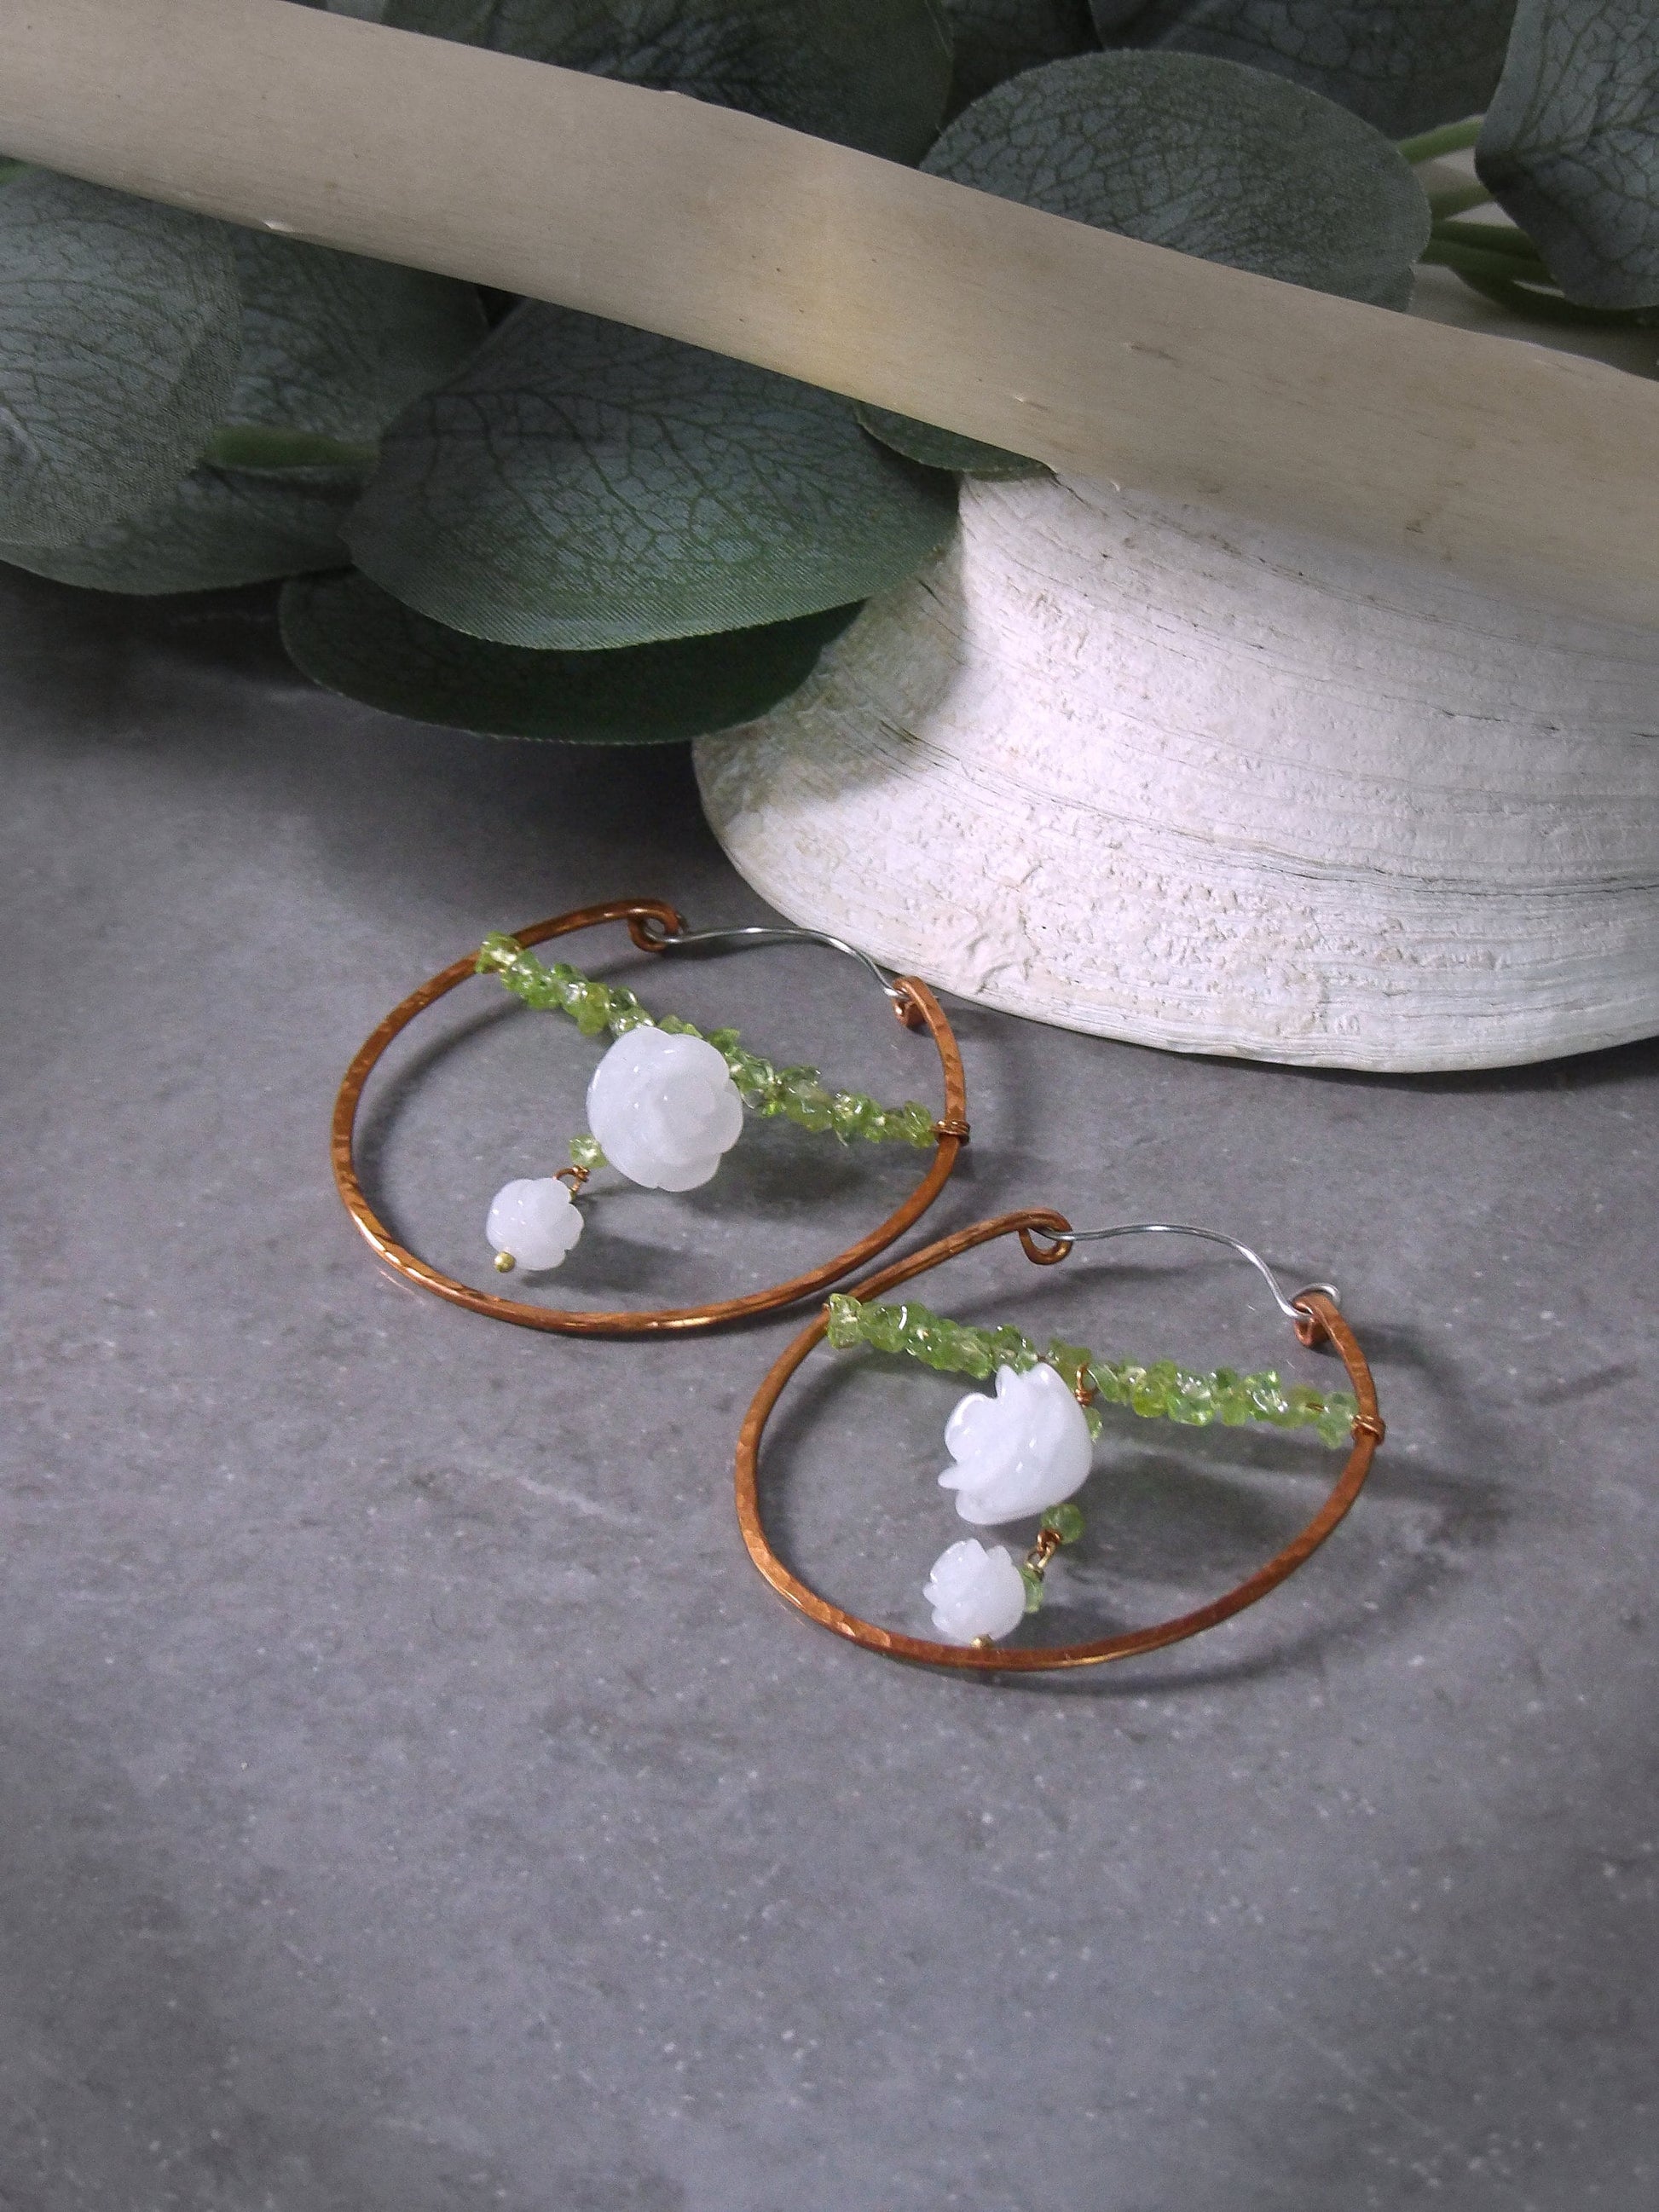 Hammered copper hoop earrings - 7th anniversary gift - gift for her - peridot earrings - jade earrings - rose earrings - bohemian jewelry